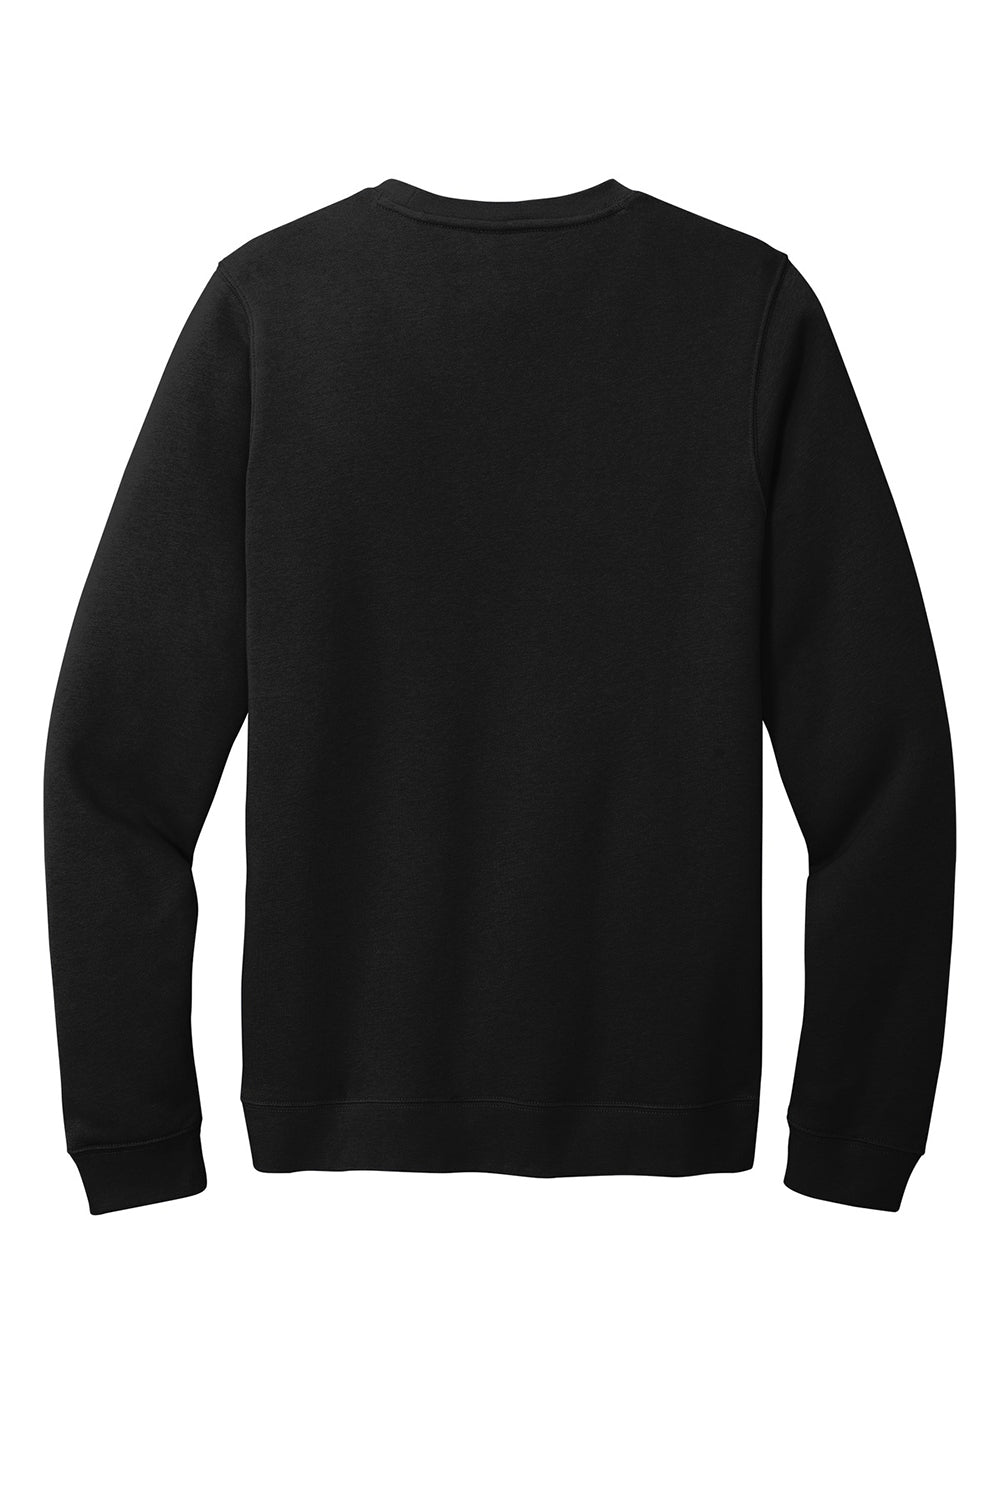 Nike CJ1614 Mens Club Fleece Crewneck Sweatshirt Black Flat Back